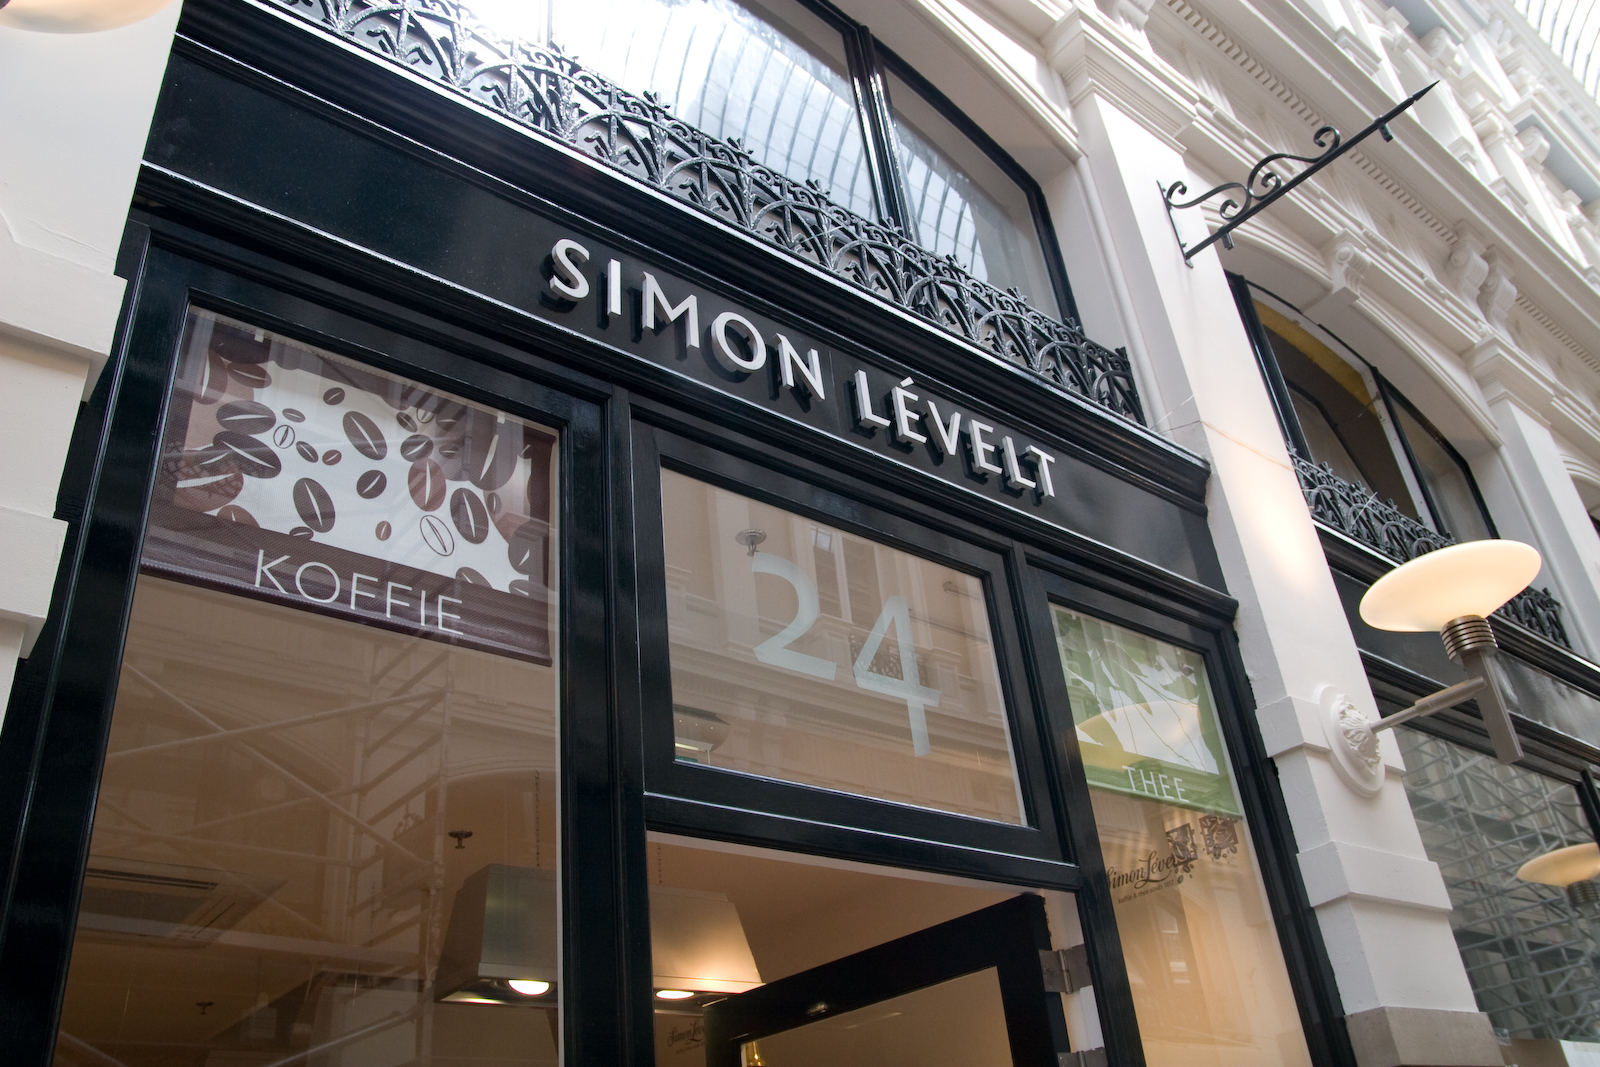 Crisis in retailland? Simon Lévelt groeit in Nederland naar 42 winkels! Bron: FranchiseFormules.NL